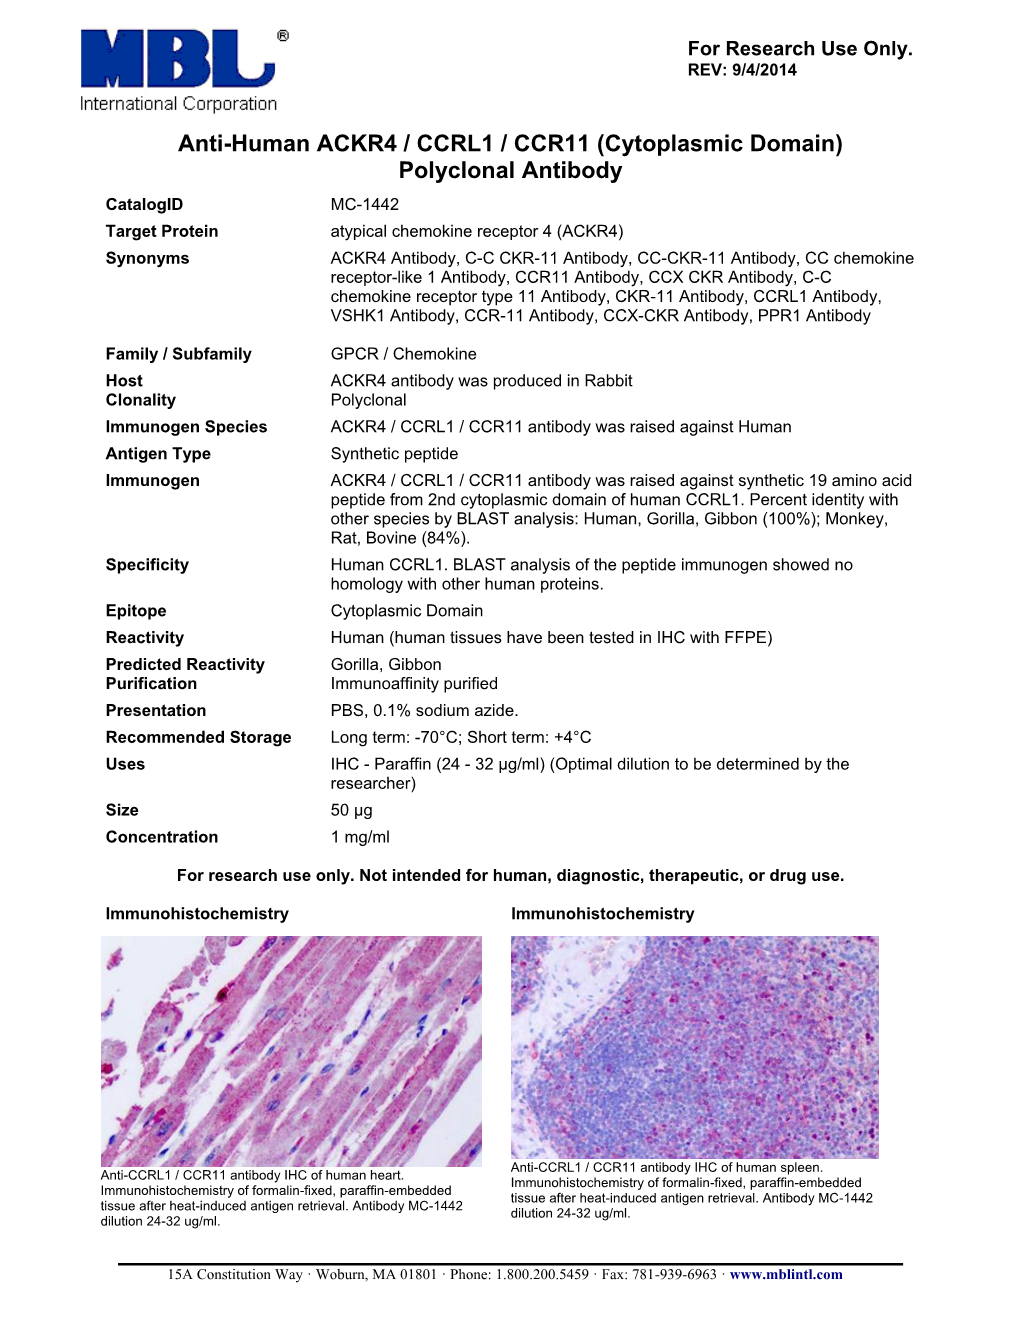 Anti-Human ACKR4 / CCRL1 / CCR11 (Cytoplasmic Domain) Polyclonal Antibody